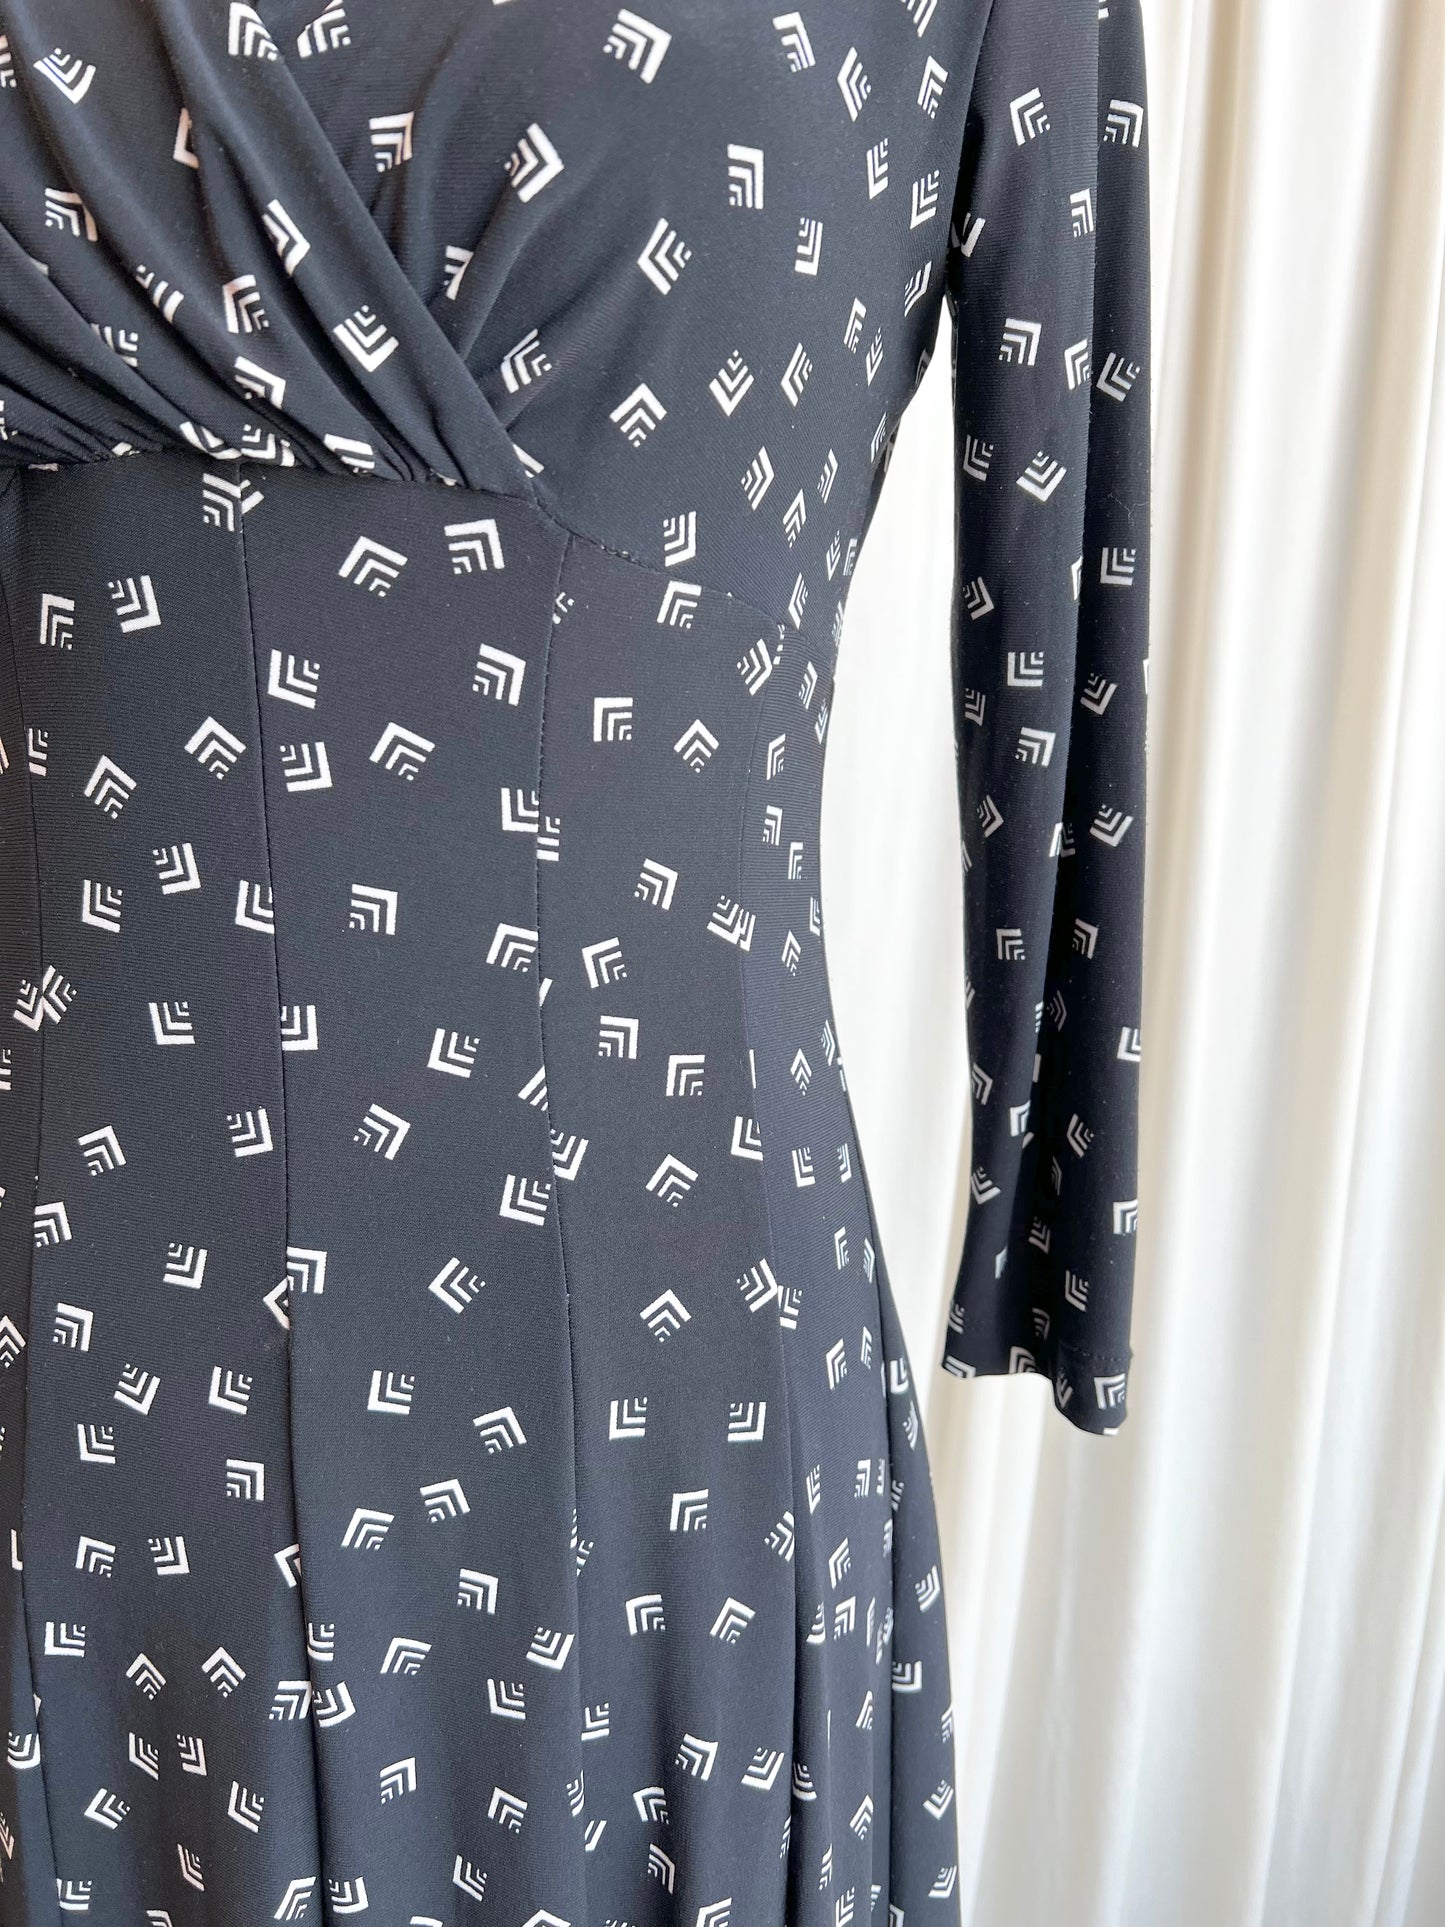 Black Geometric Patterned Dress - Small